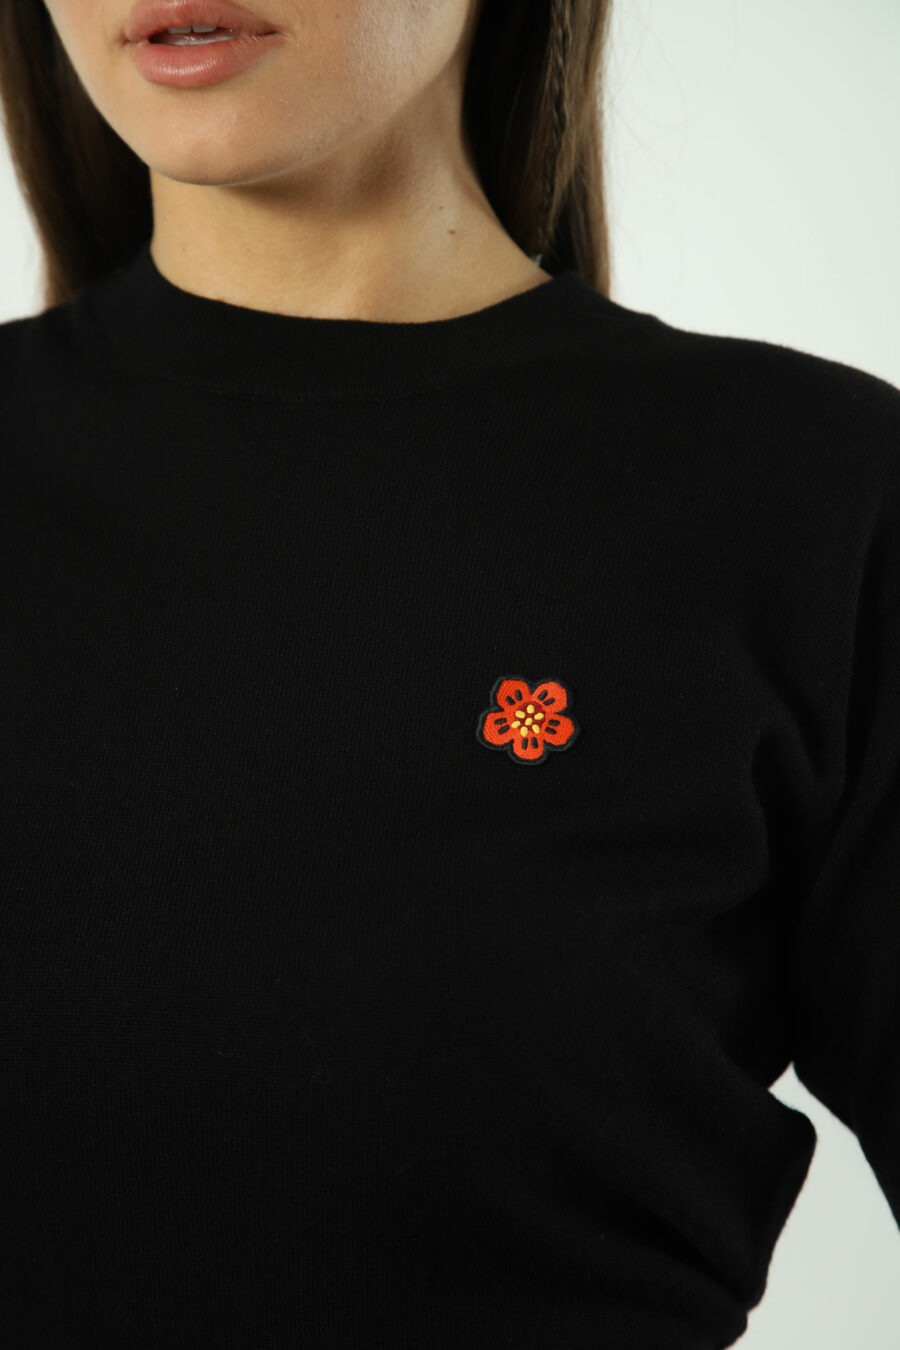 Black jumper with orange mini-logo - Photos 1297